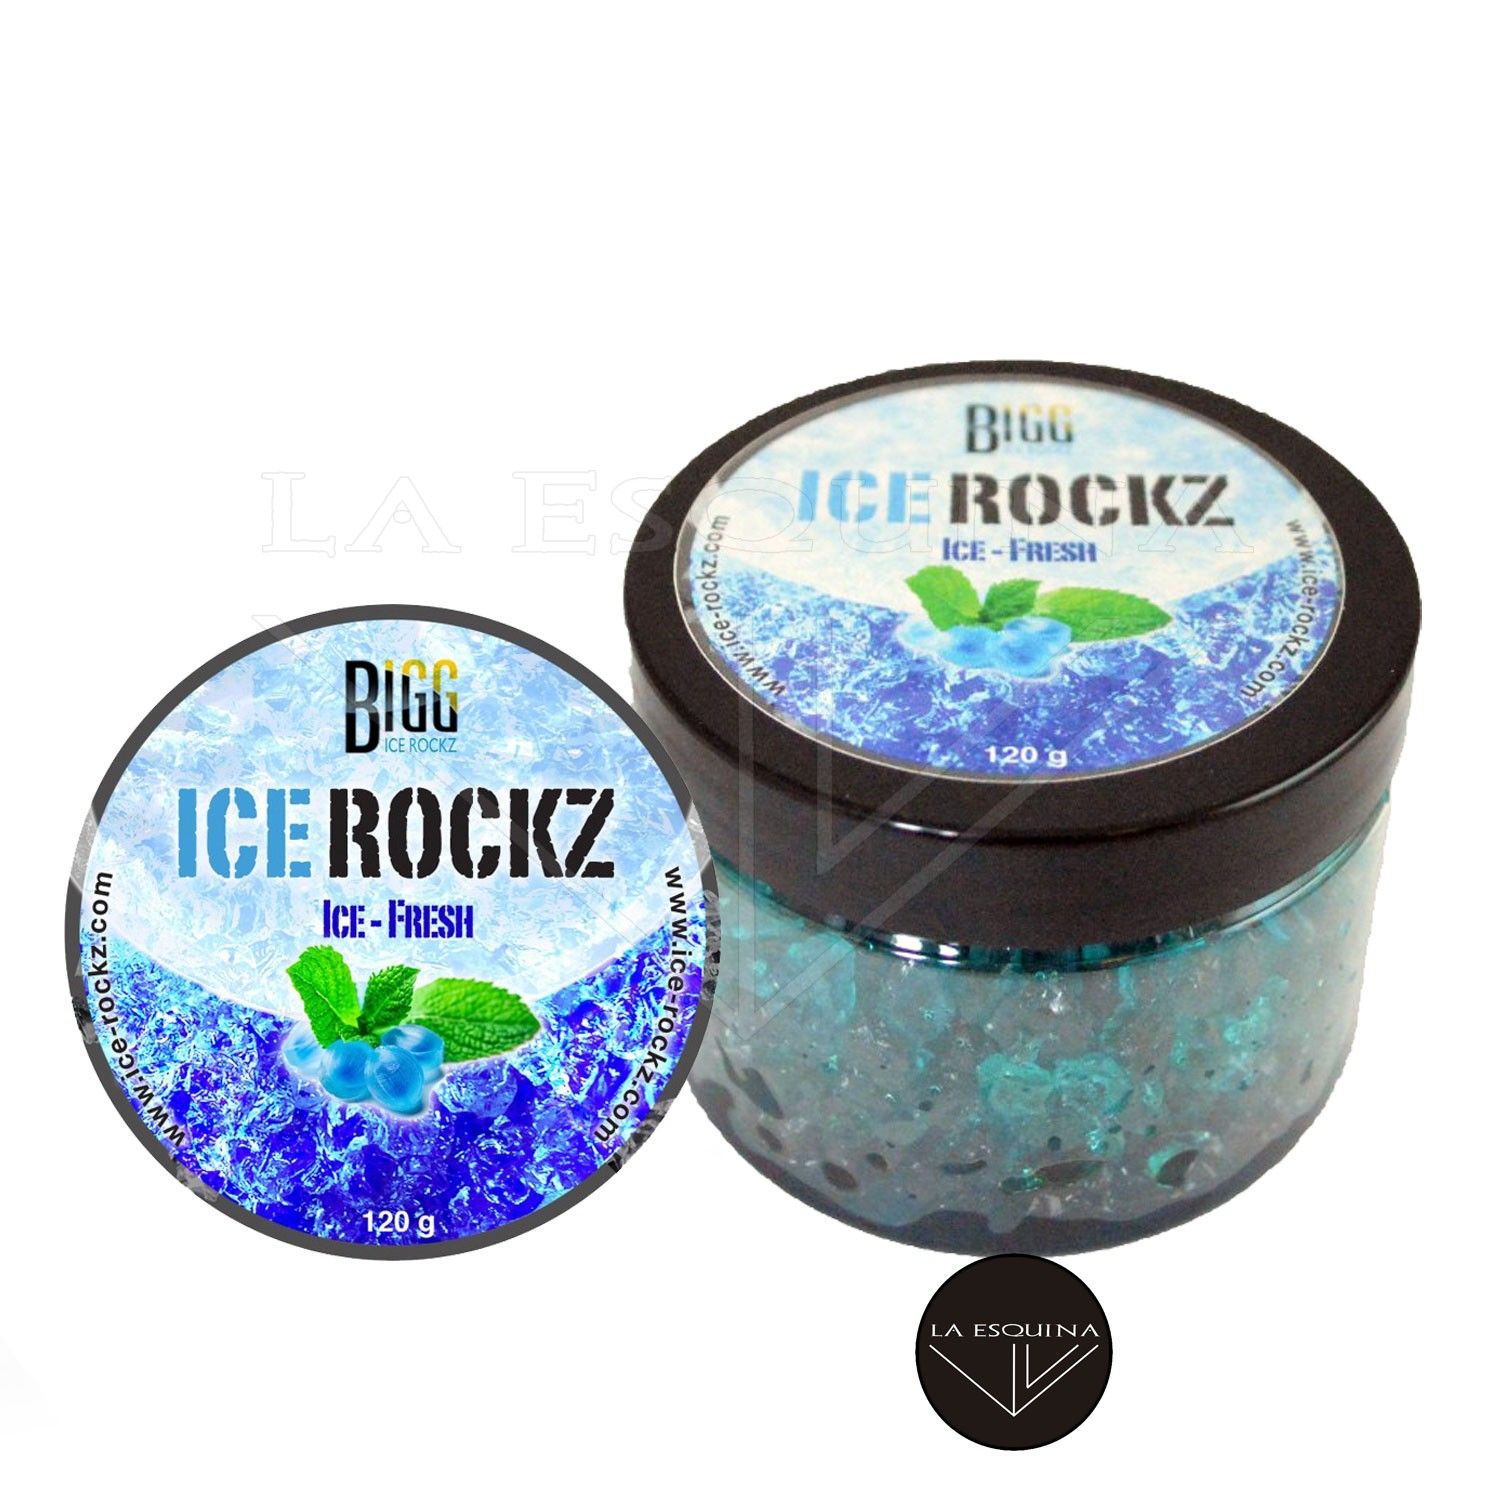 Gel Rock de Cachimba BIGG ICE ROCKZ – 120 g. – Ice-Fresh